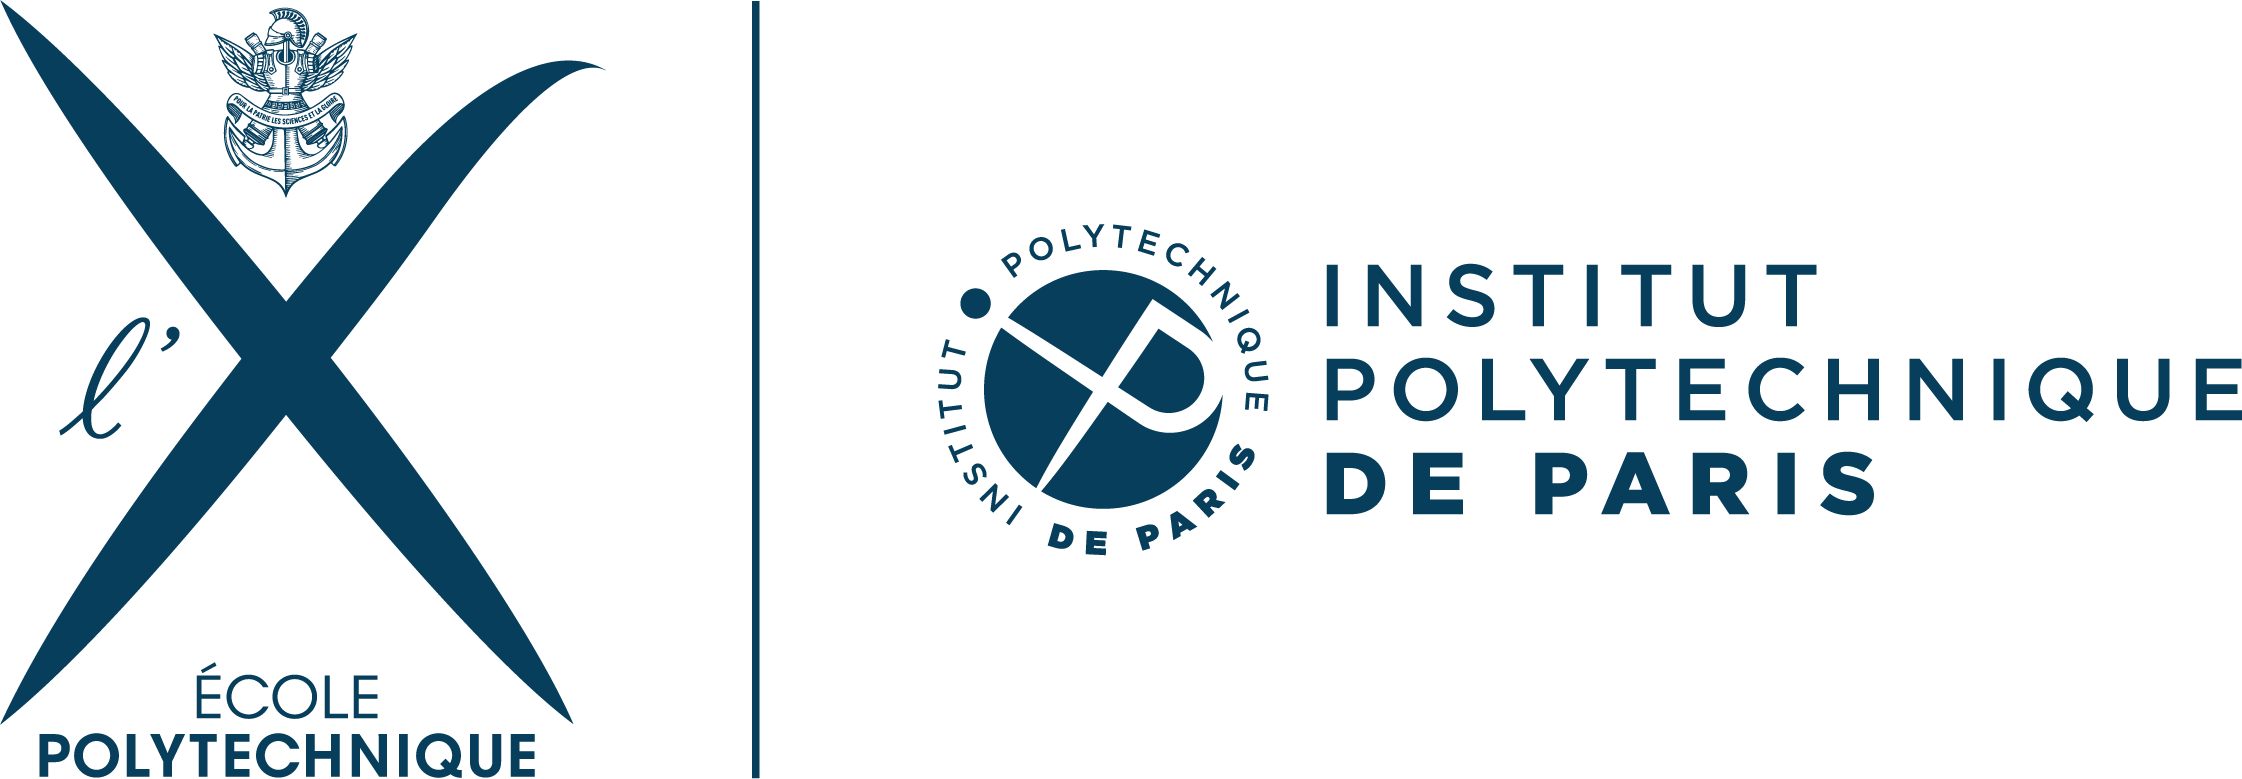 ecole-polytechnique-logo